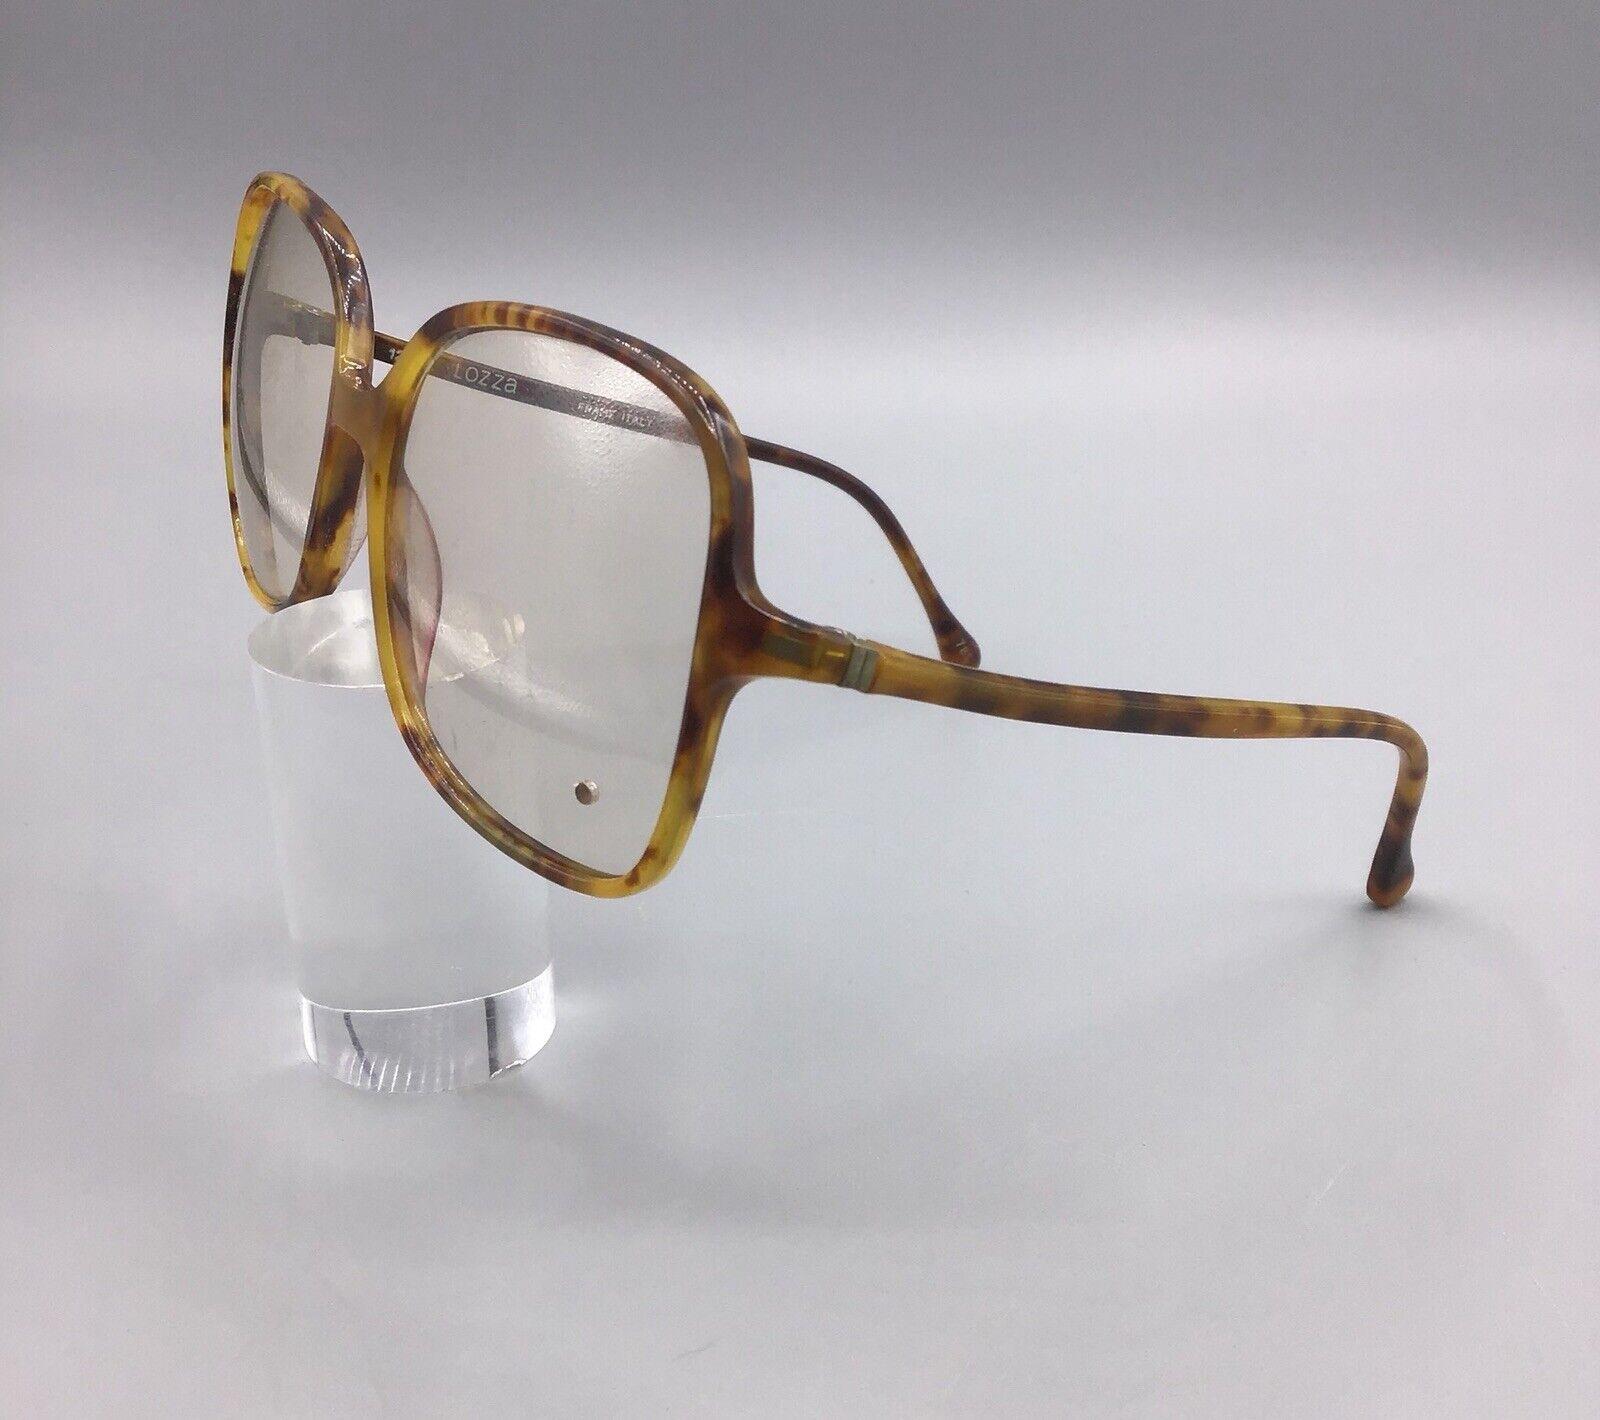 Lozza Soffio 3 occhiale vintage eyewear frame brillen lunettes